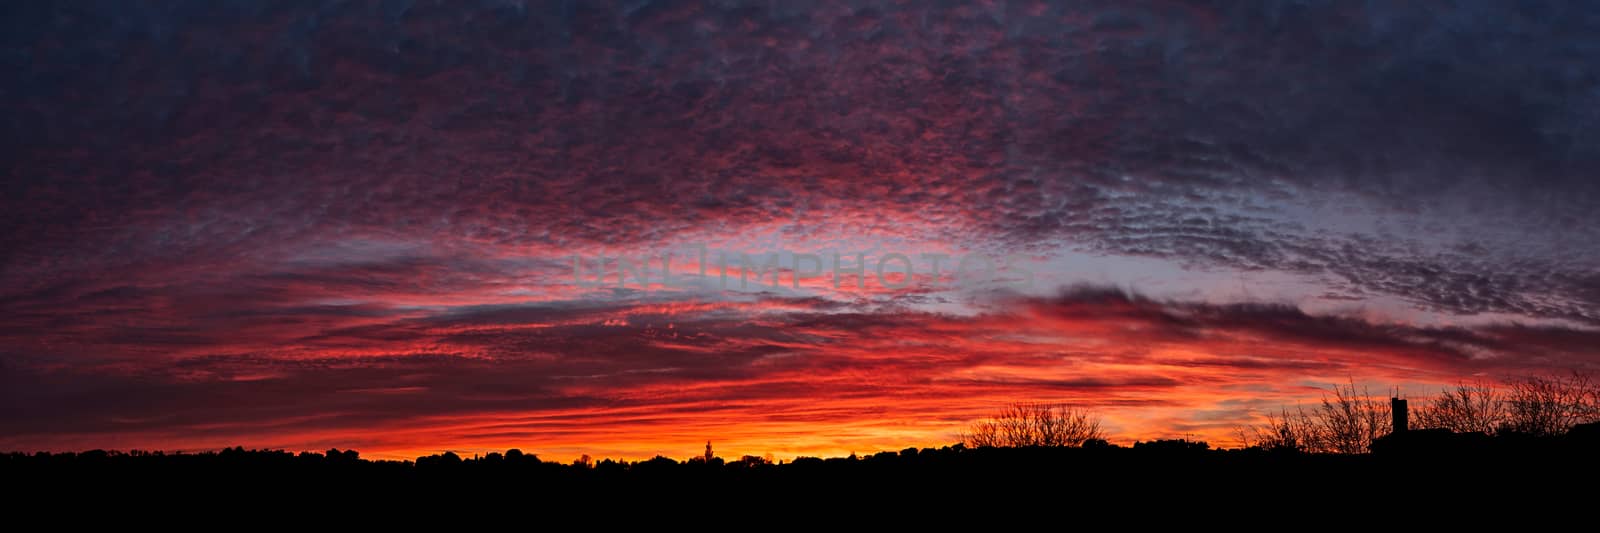 Wonderful panoramic colorful sunset by LuigiMorbidelli